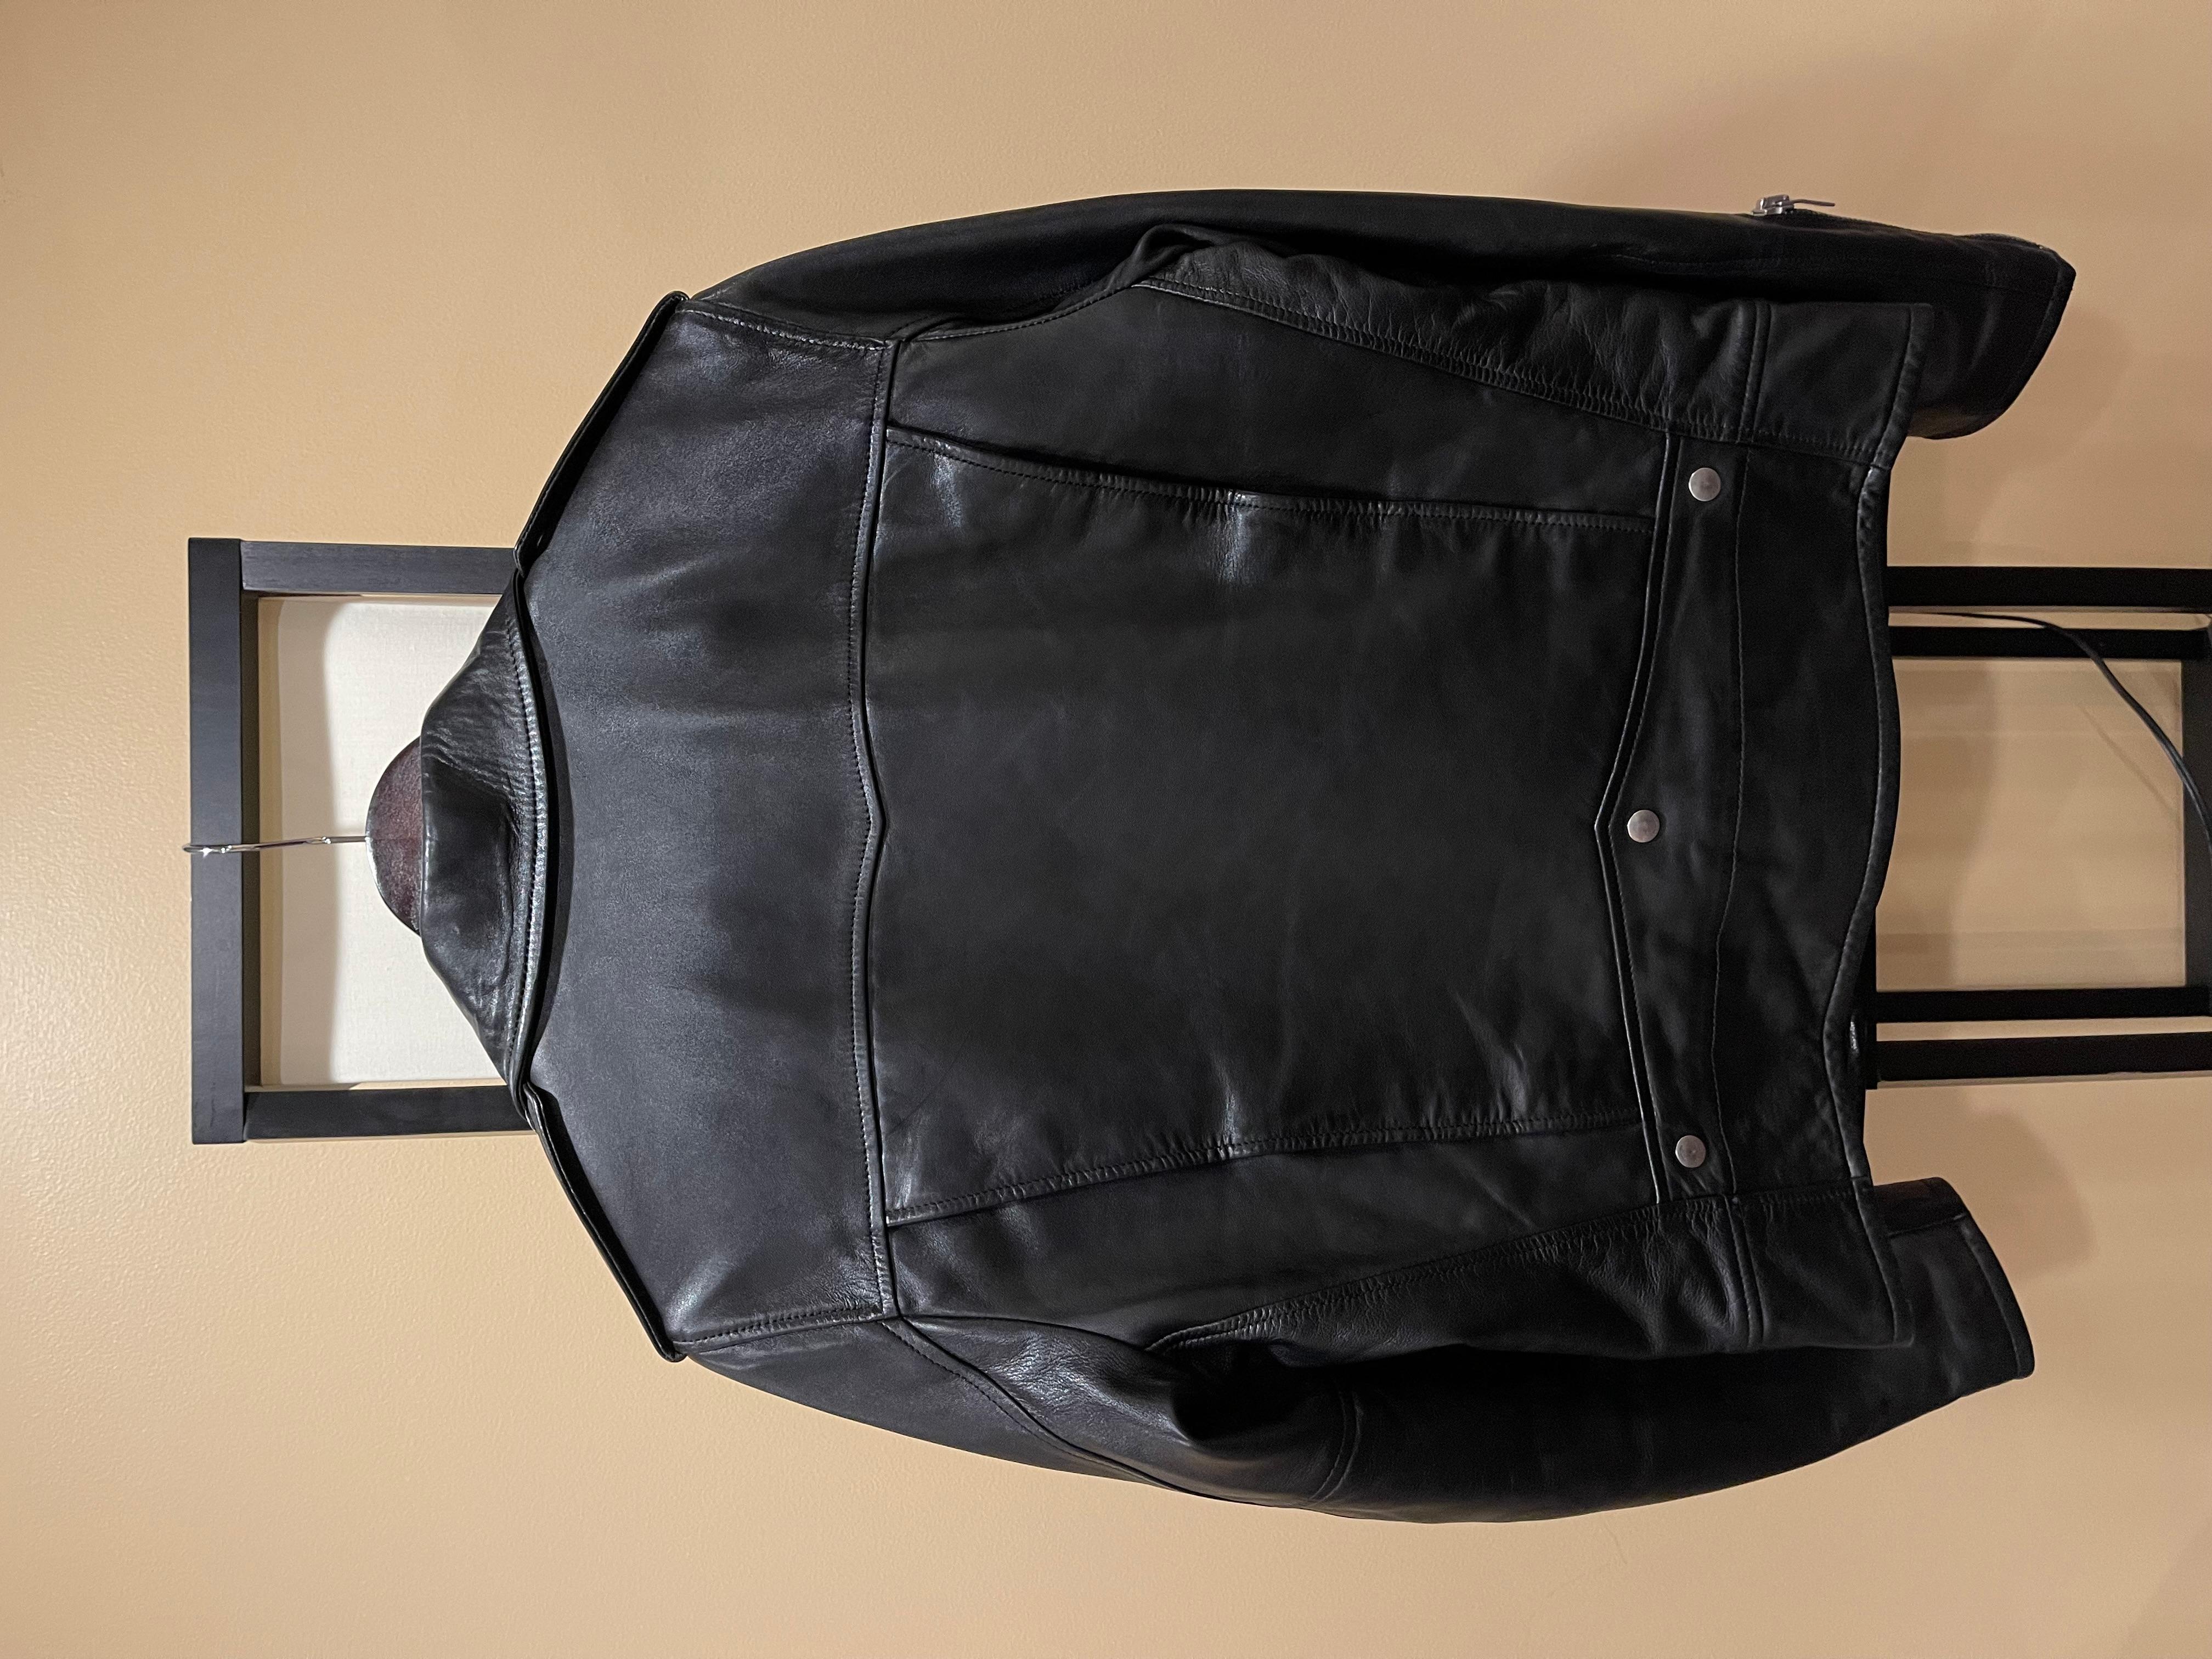 Saint Laurent Paris SS16
L01 Lamb Leather Biker Jacket
Size 52 (amazing fit)
Excellent overall condition (leather could last a lifetime). Minor scratches on the jacket; see detailed pics.

Measurements:
Chest: 21”
Length: 25.25”
Shoulders: